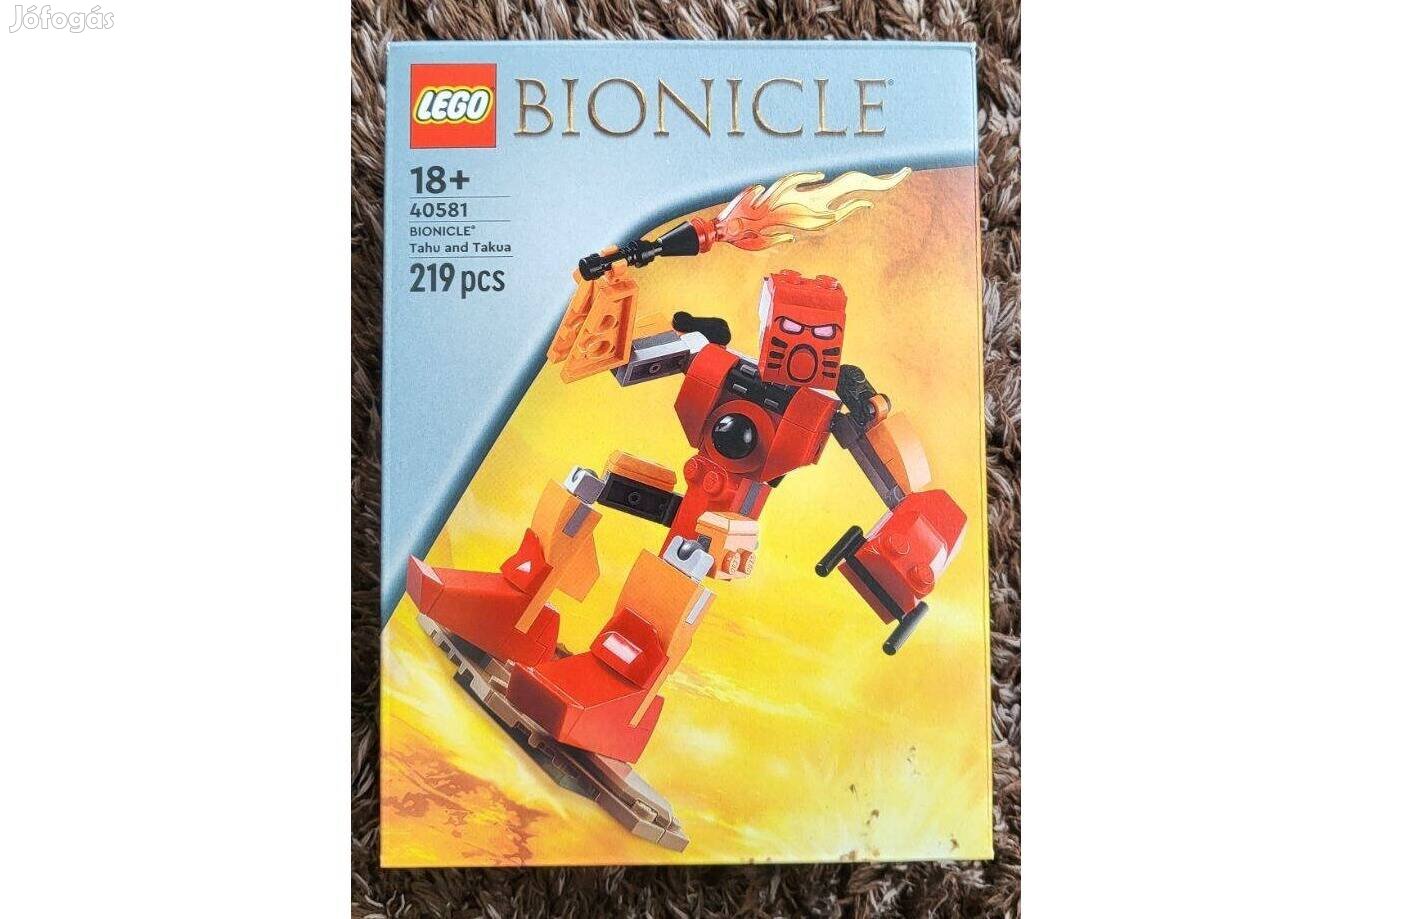 40581 LEGO Bionicle Tahu és Takua - Bontatlan, Új termék!